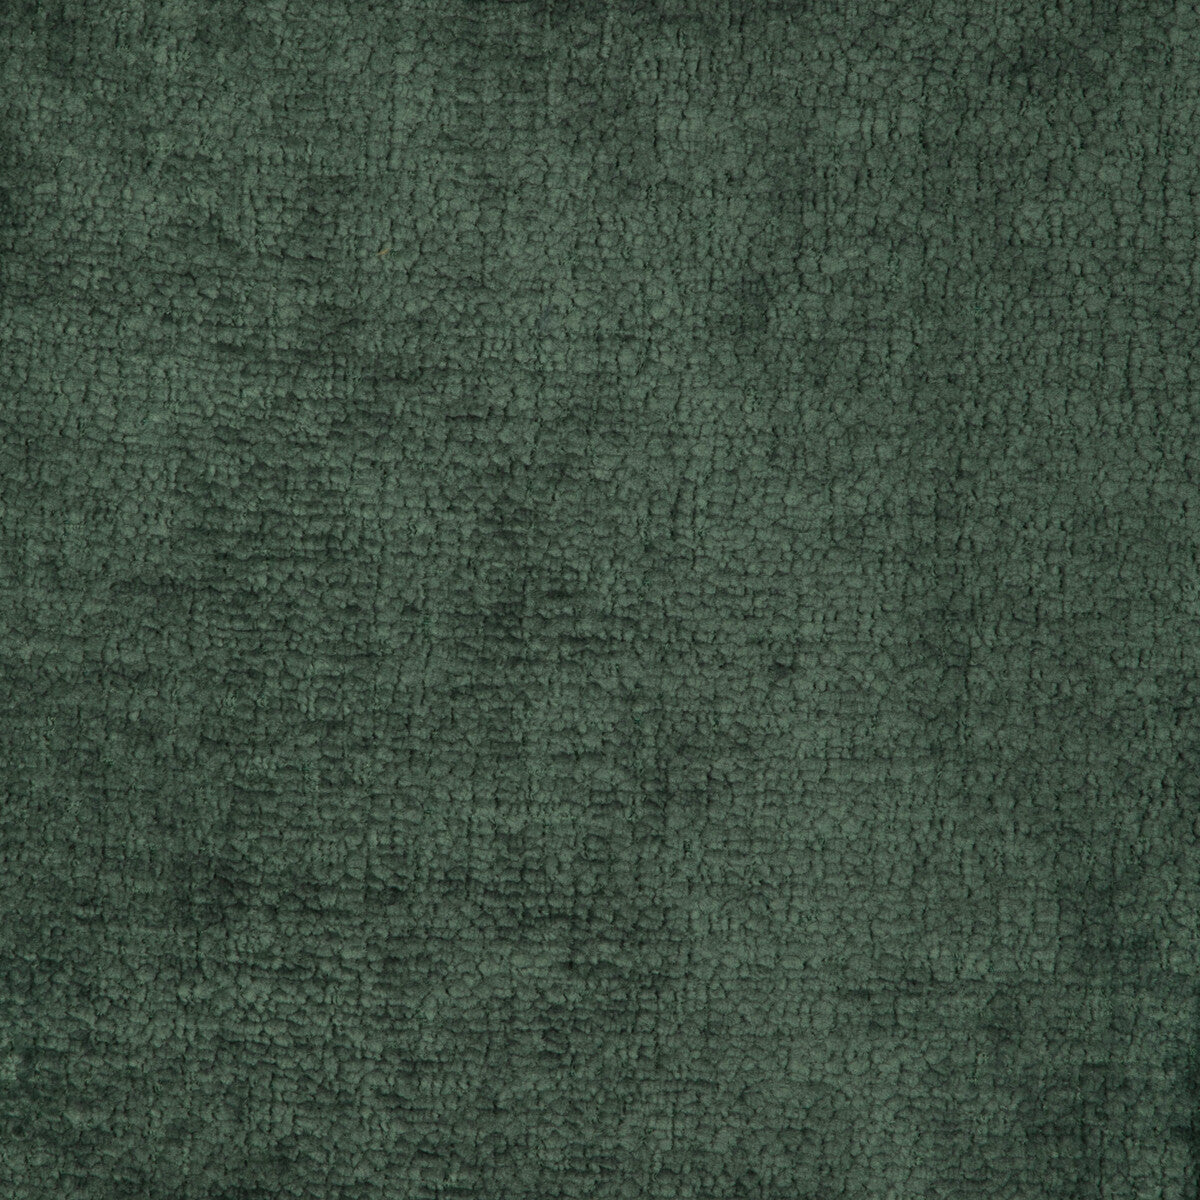 Kravet Smart fabric in 36997-30 color - pattern 36997.30.0 - by Kravet Smart